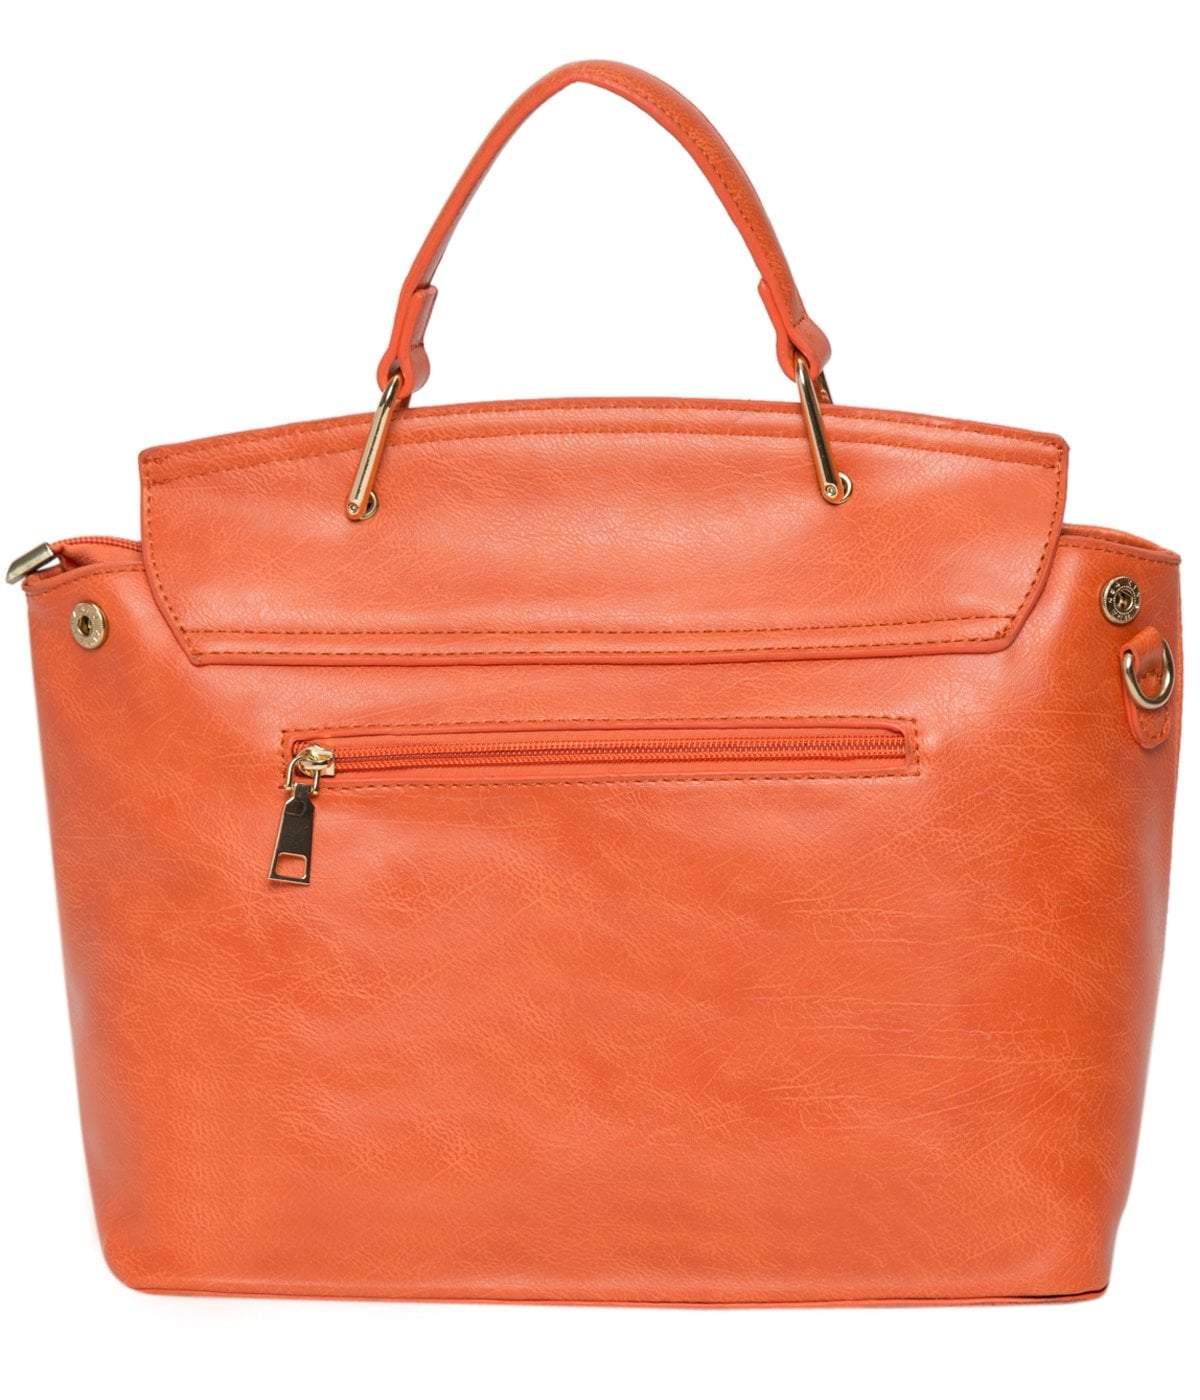 kinnoti Orange Color Satchel Bag